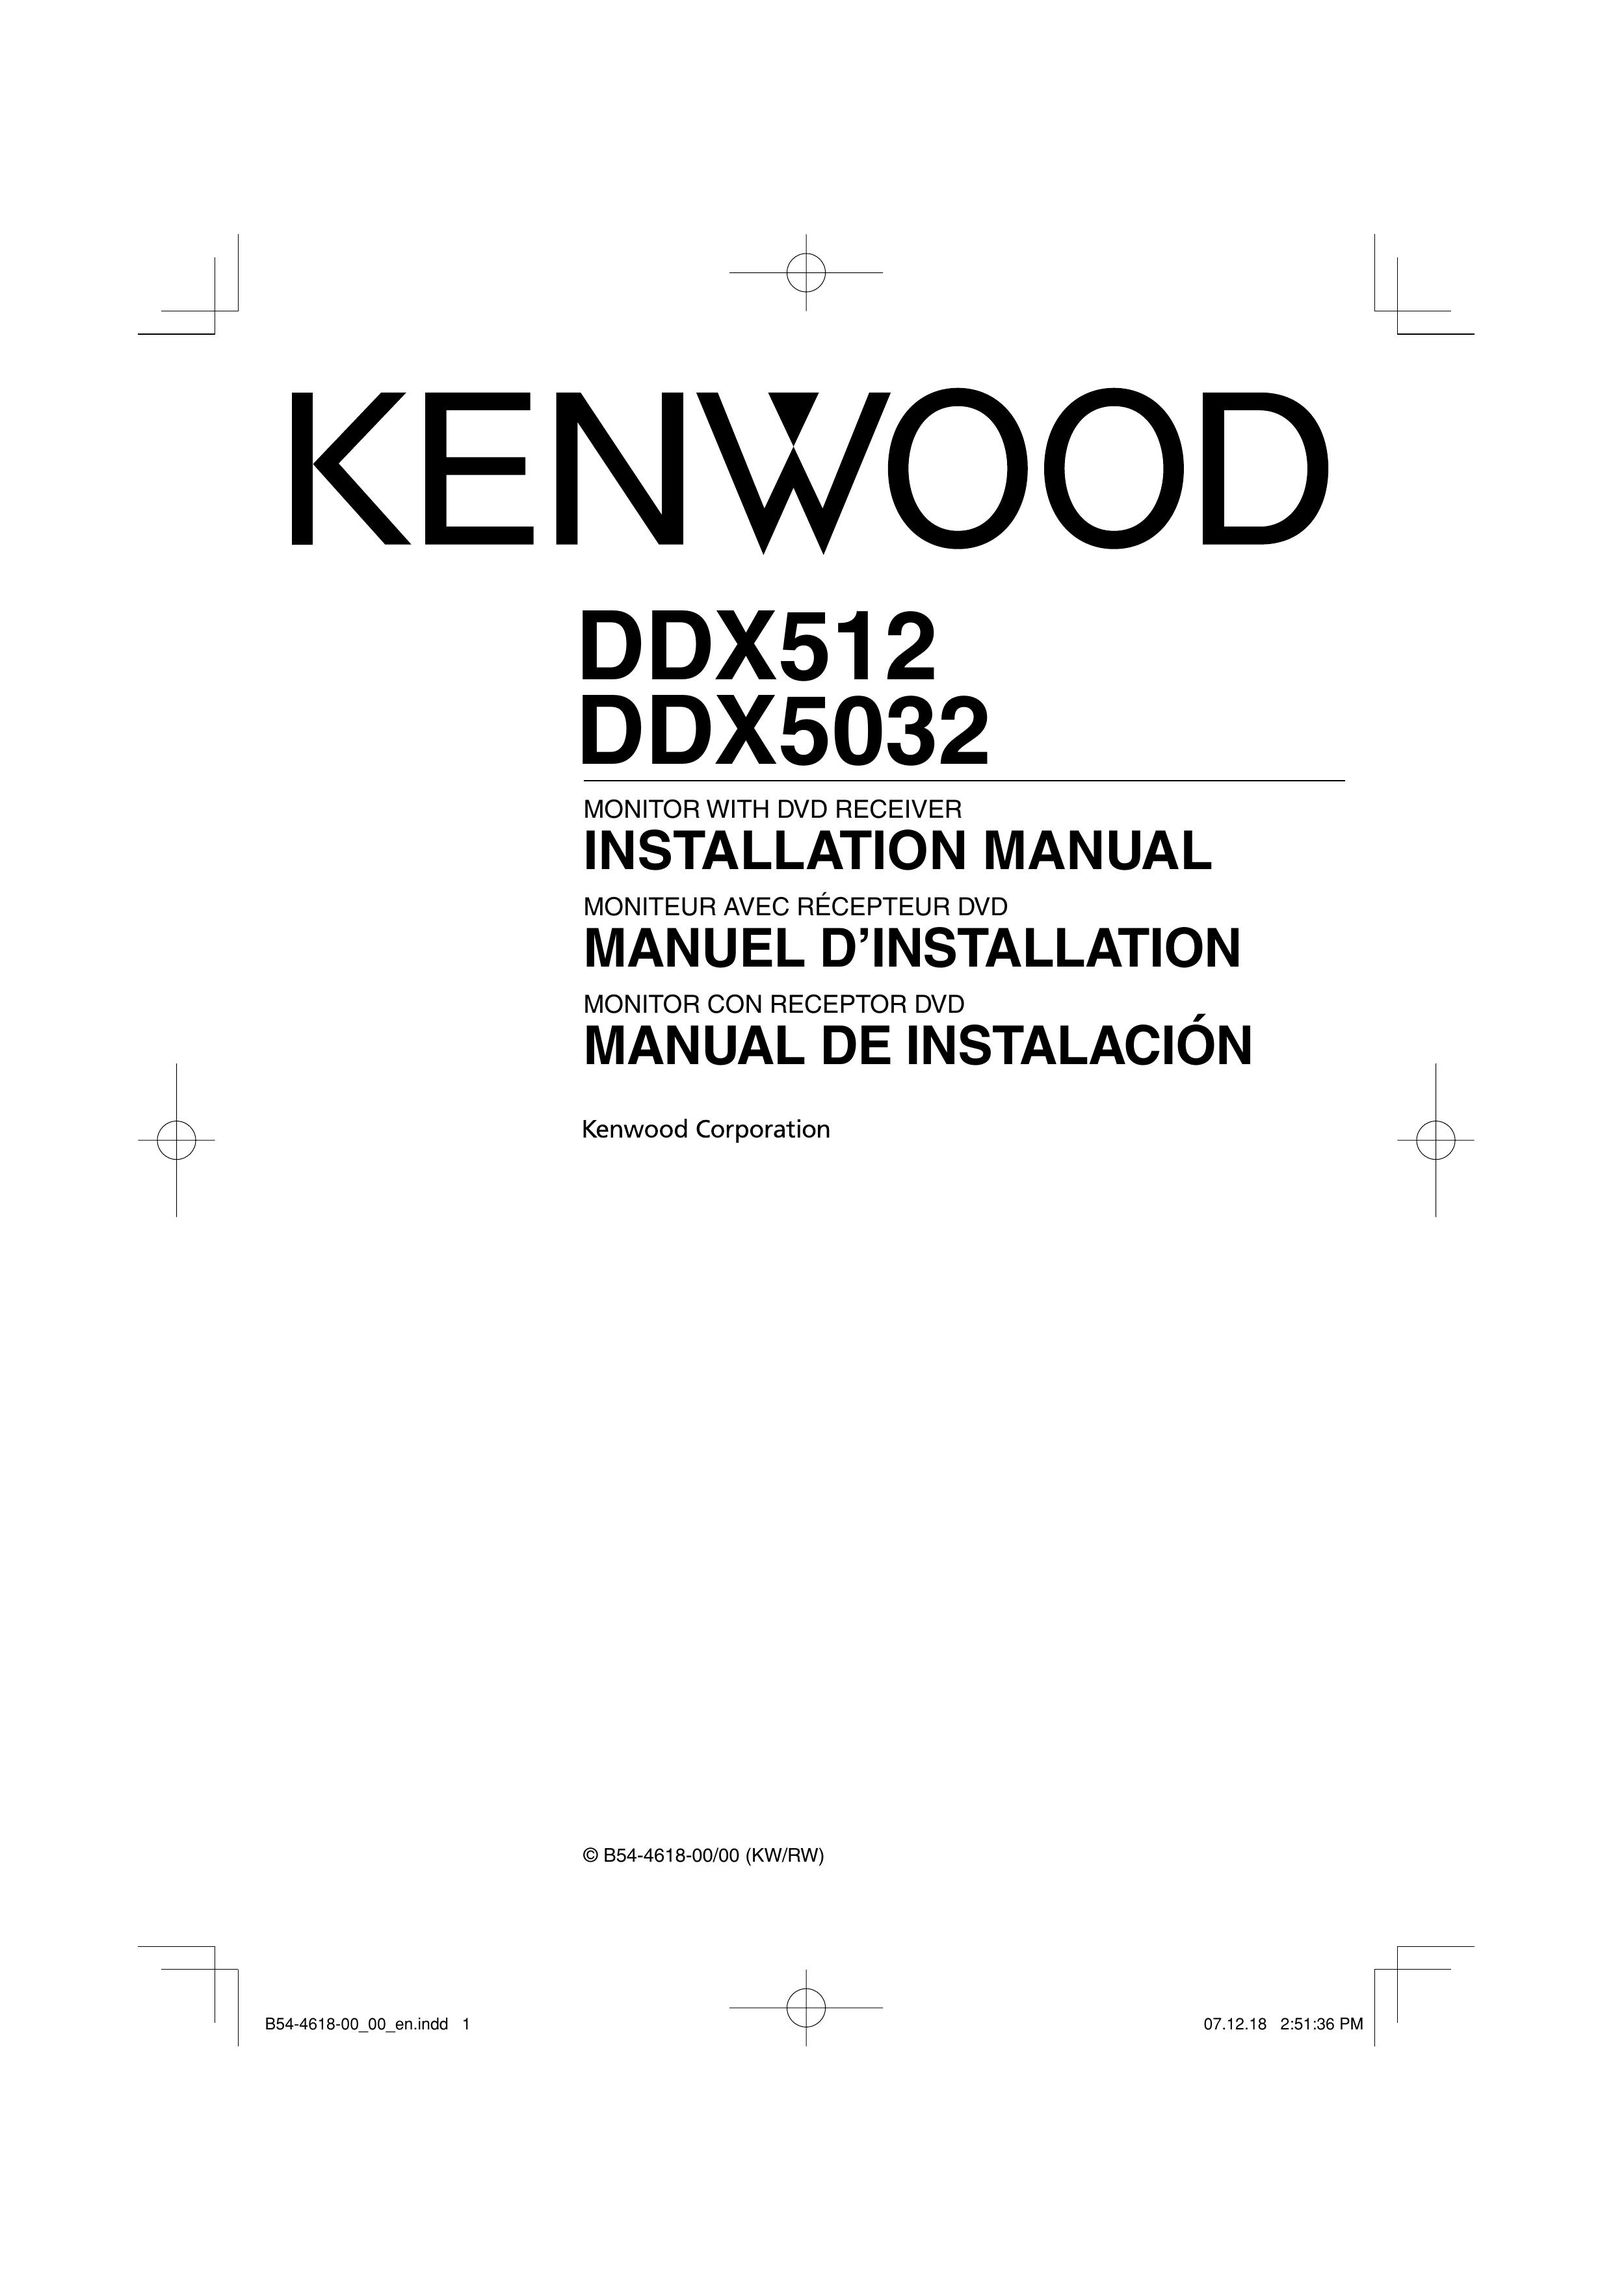 Kenwood DDX-512 Car Stereo System User Manual